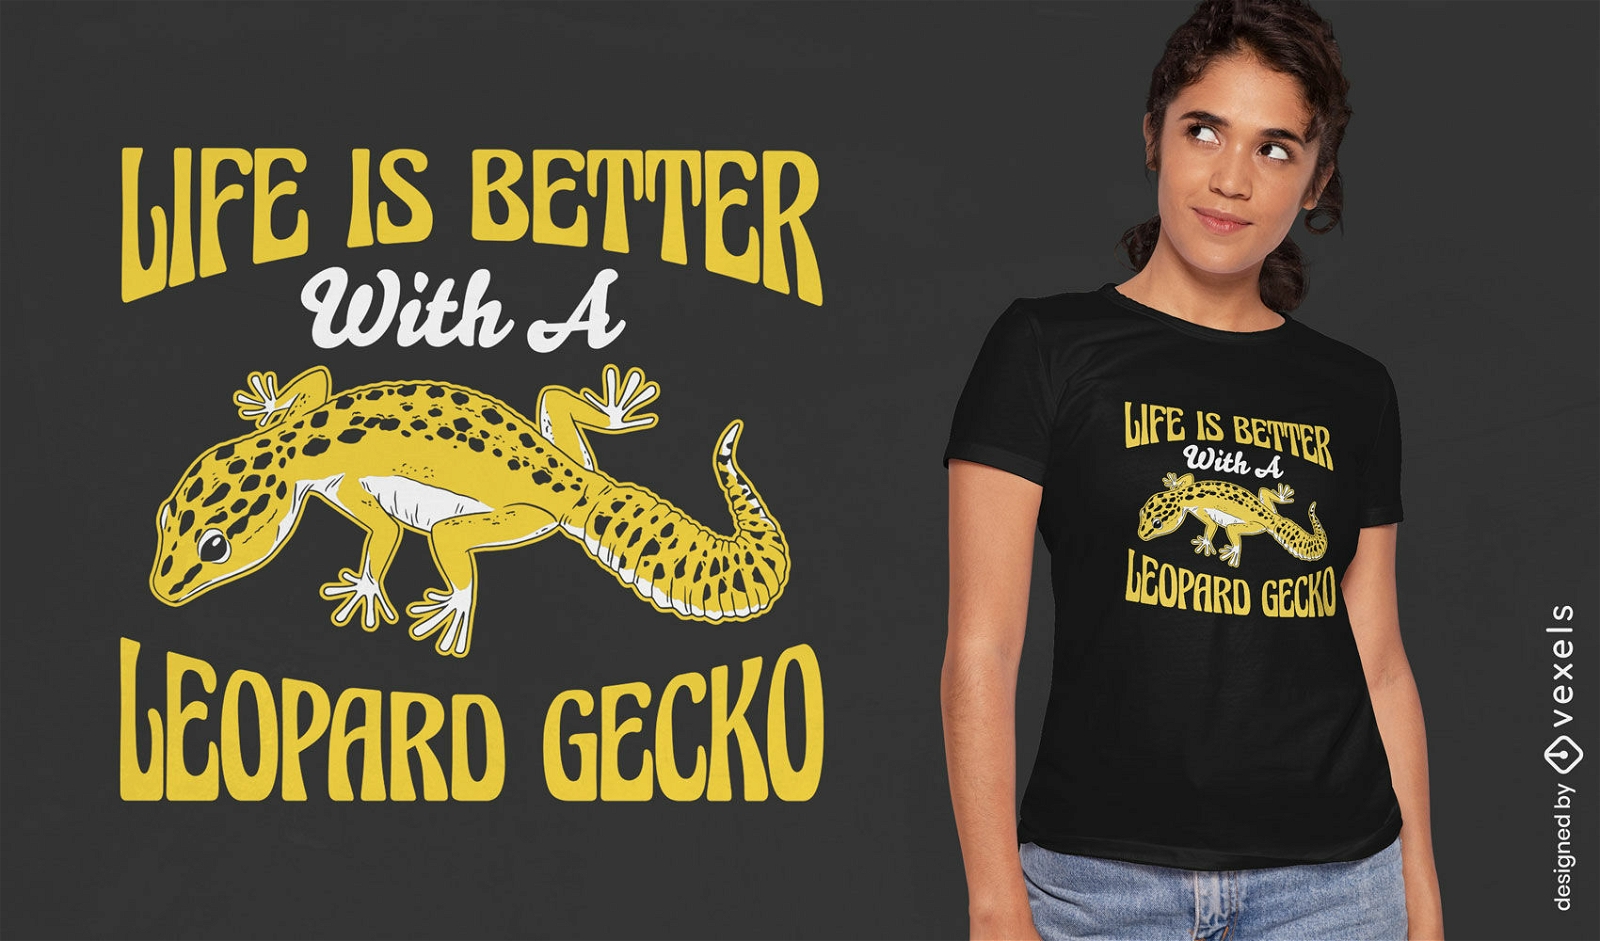 Leopard gecko quote t-shirt design